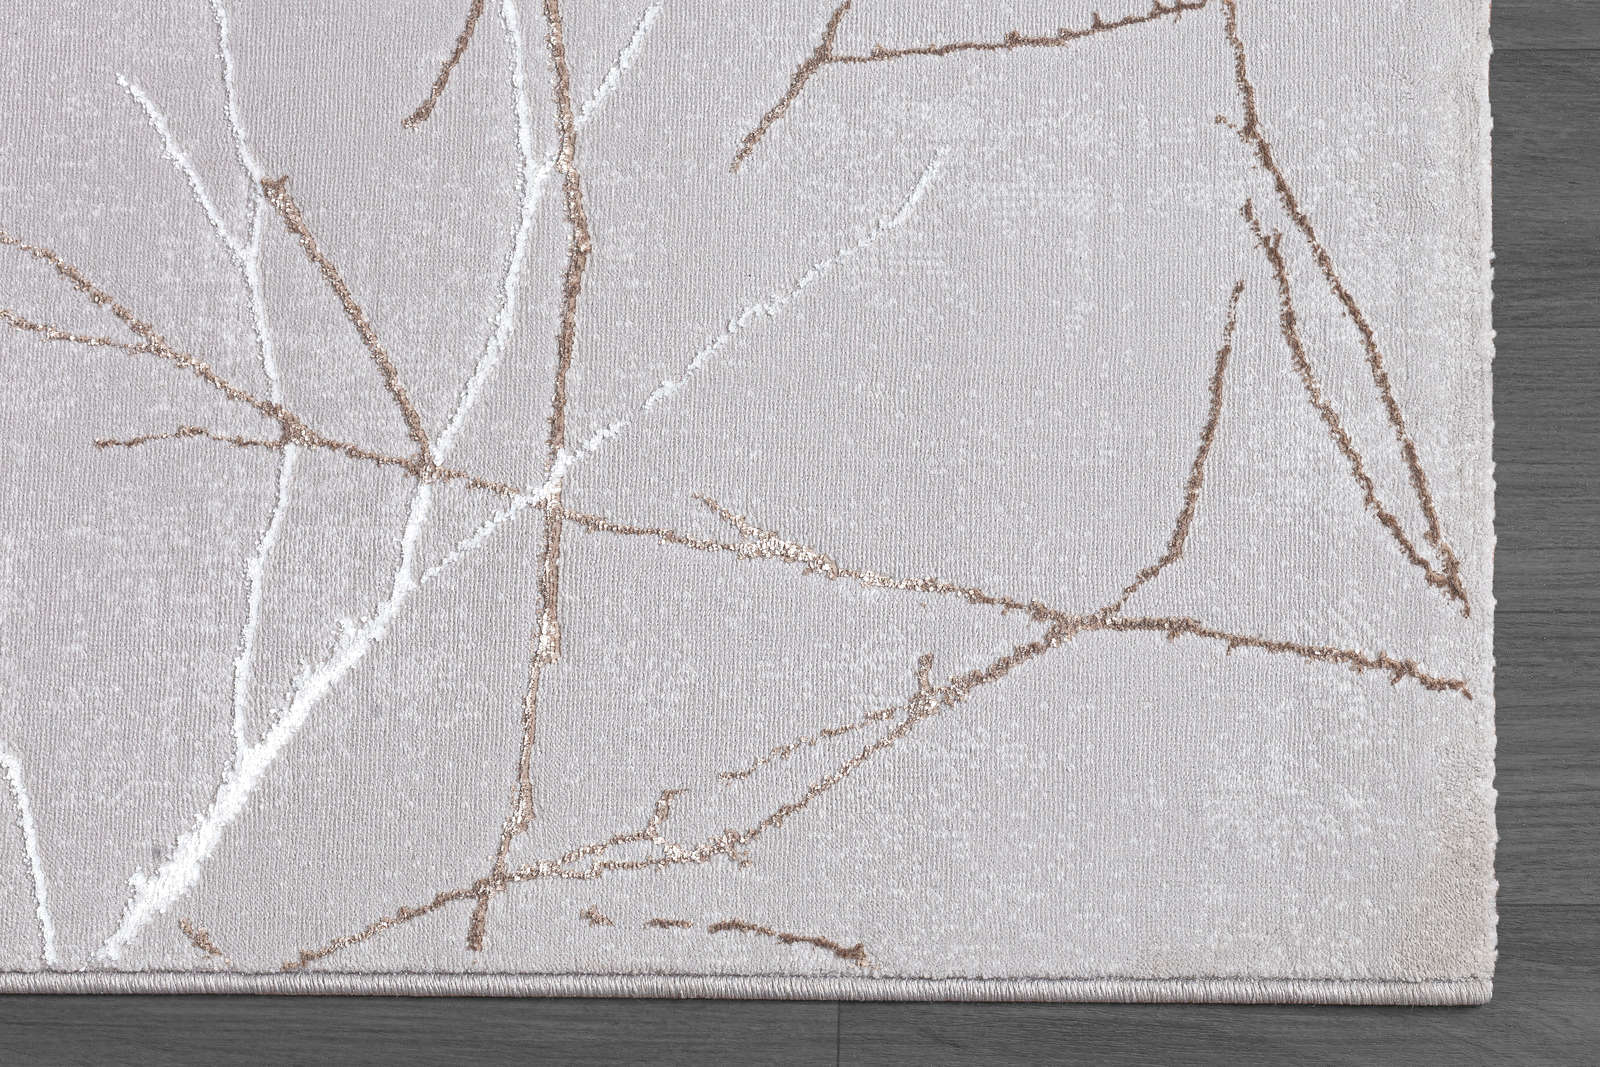             Bemusterter Hochflor Teppich in Grau – 170 x 120 cm
        